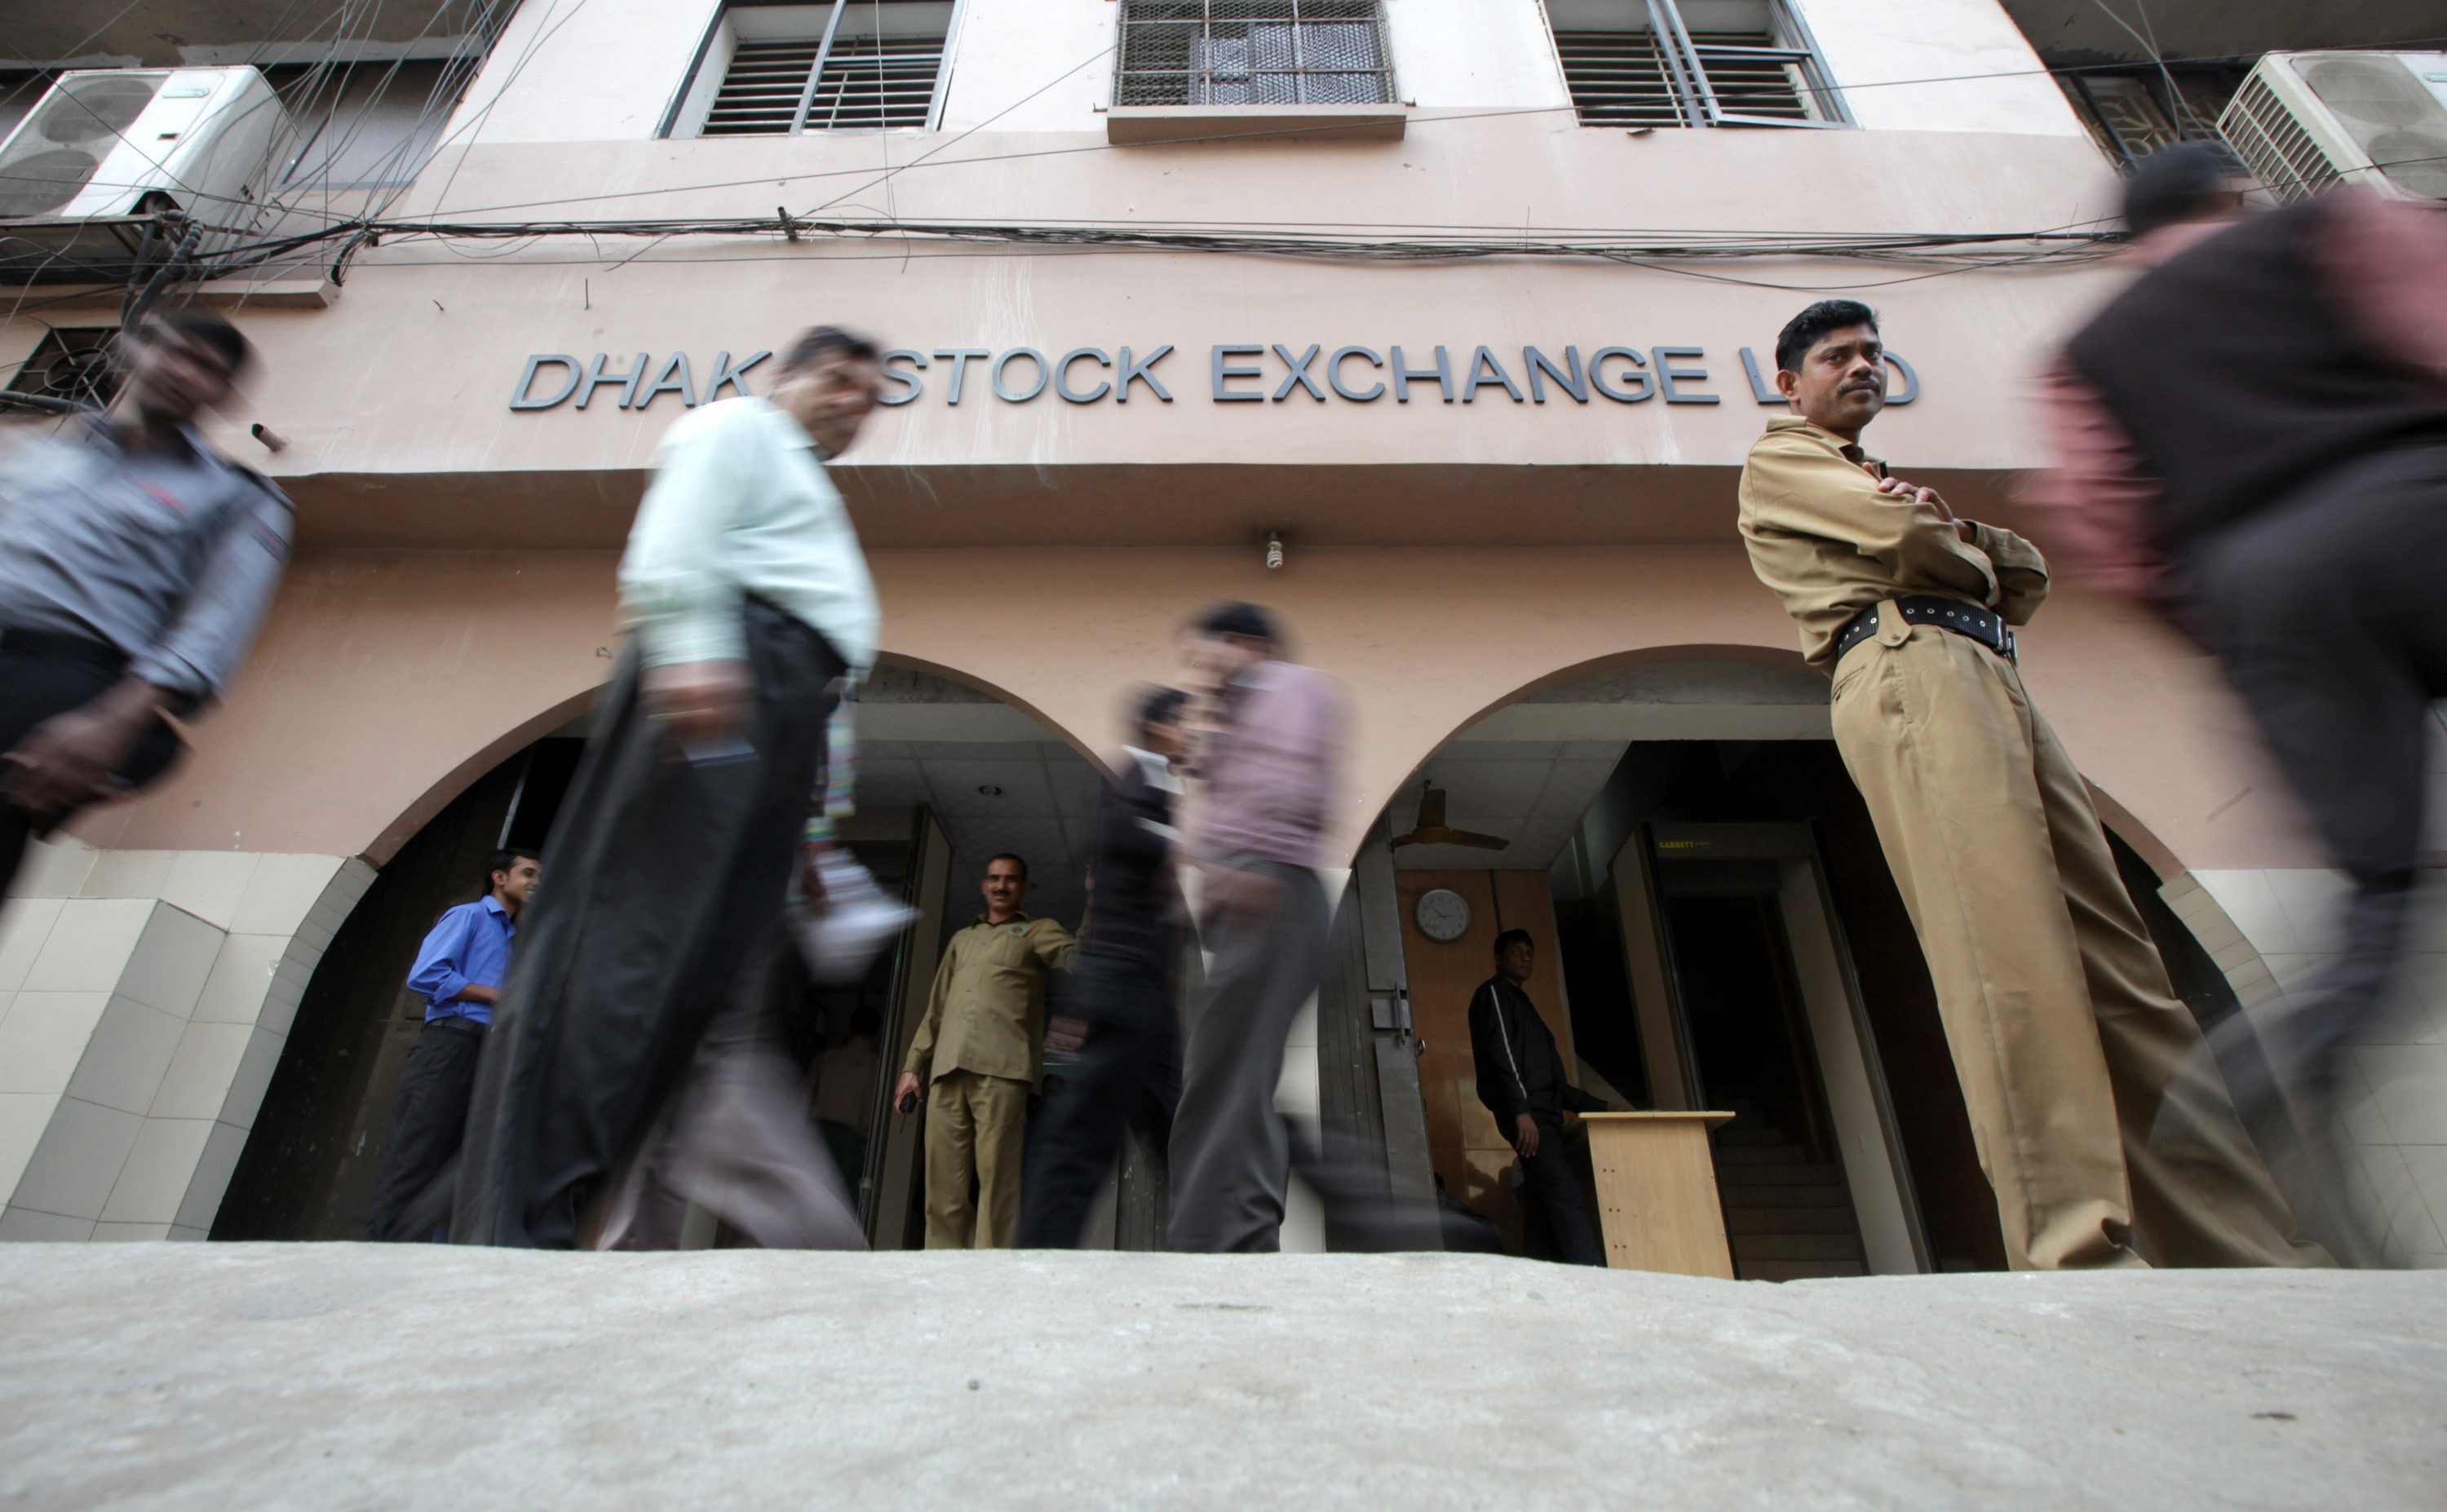 Dhaka Stock Exchange sells 25% stake to Chinese consortium for $53m